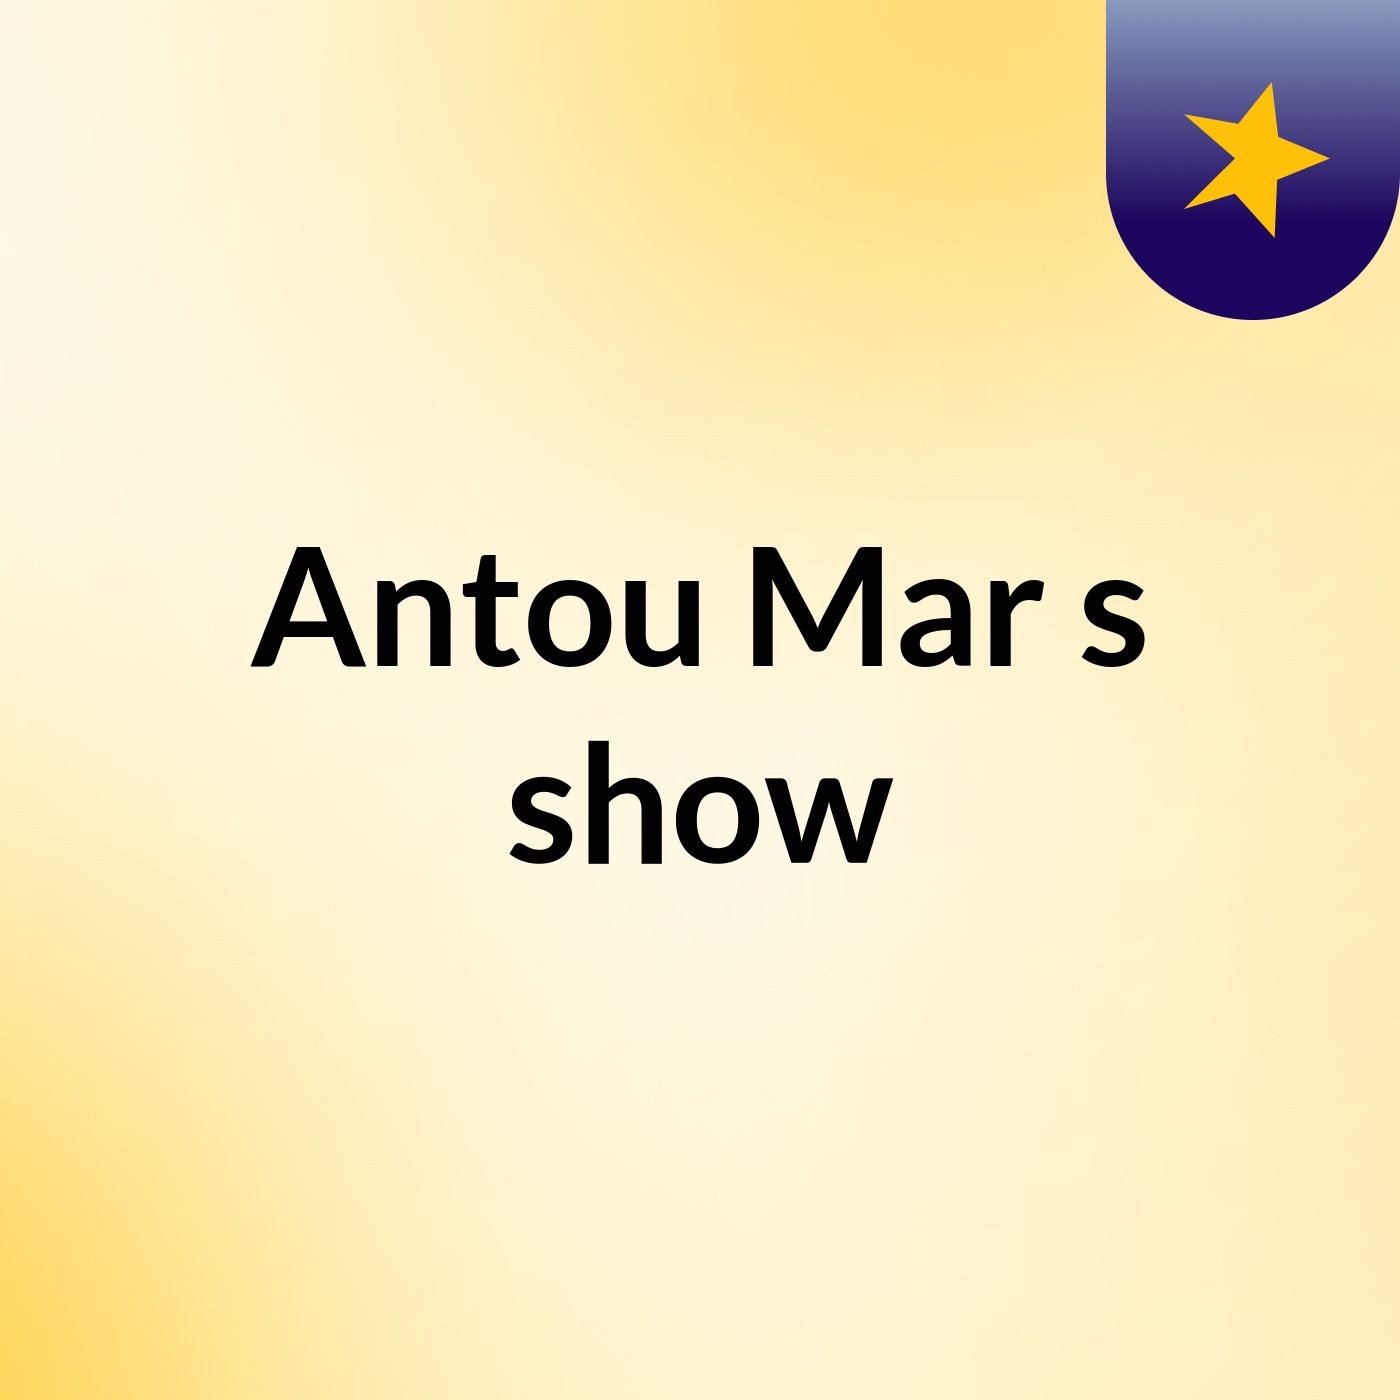 Antou Mar's show